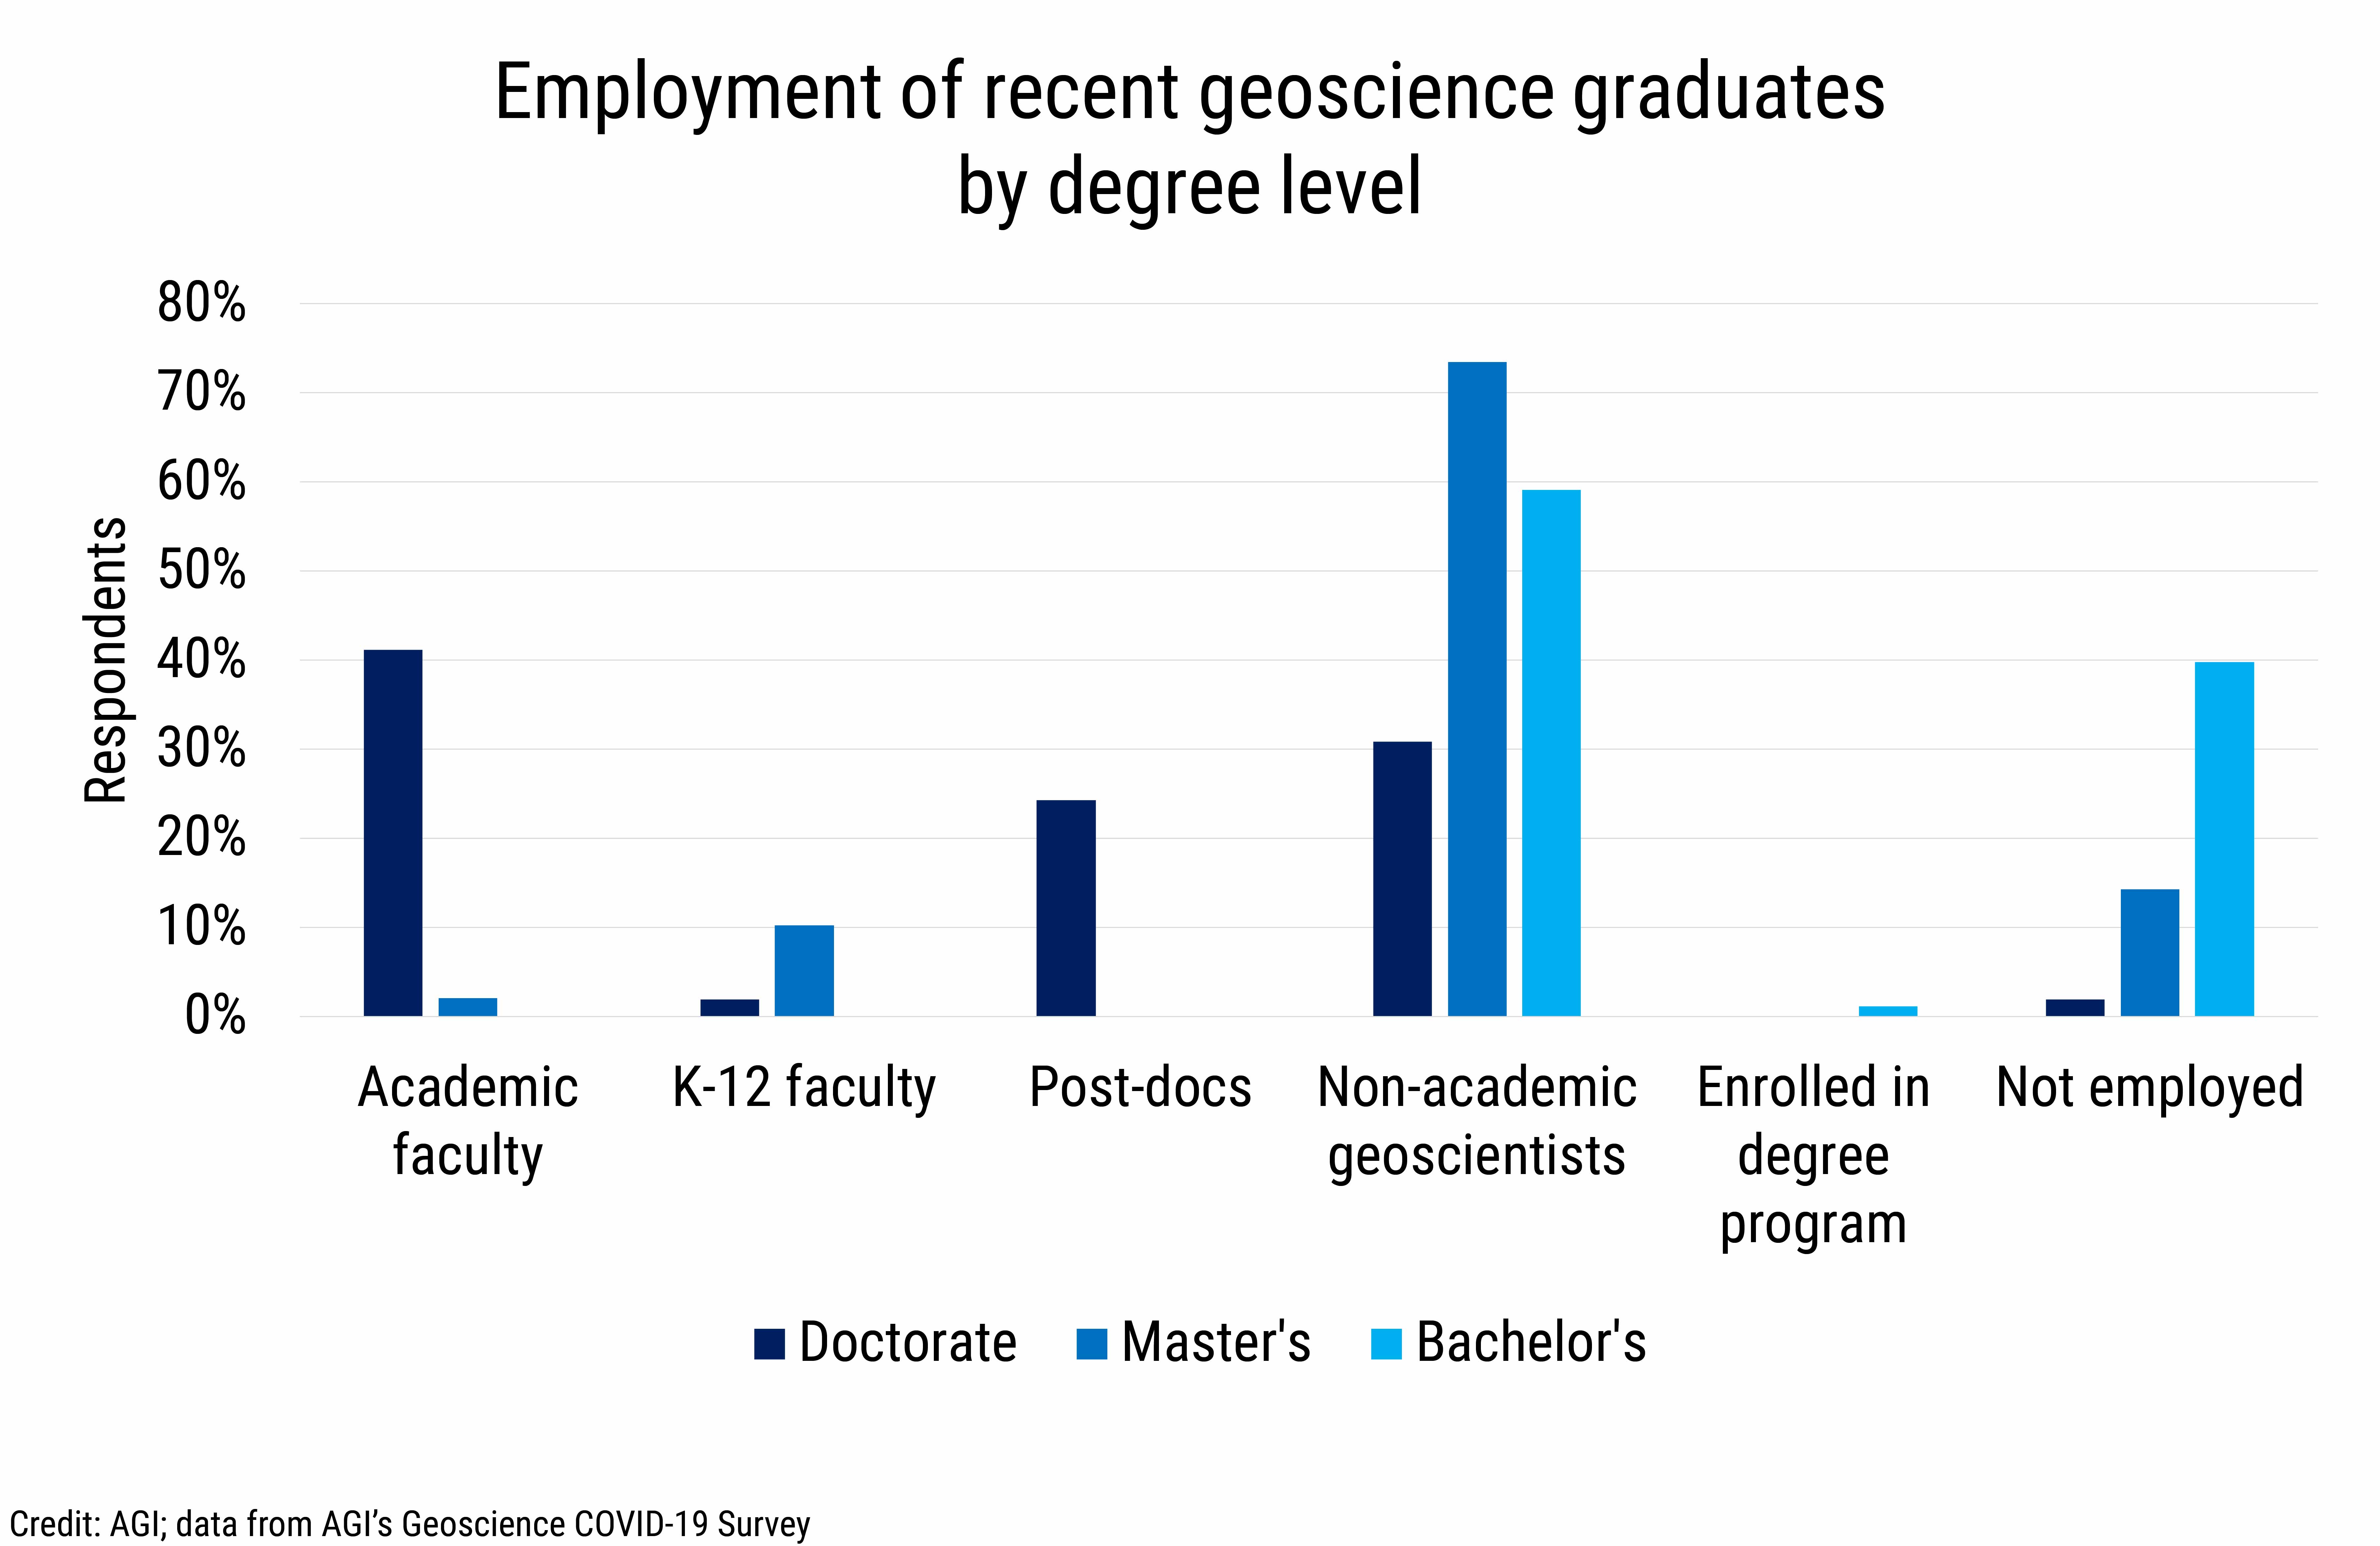 DB_2020-019 chart 02: Employment of recent geoscience graduates by degree level (credit: AGI; data from AGI’s Geoscience COVID-19 Survey)